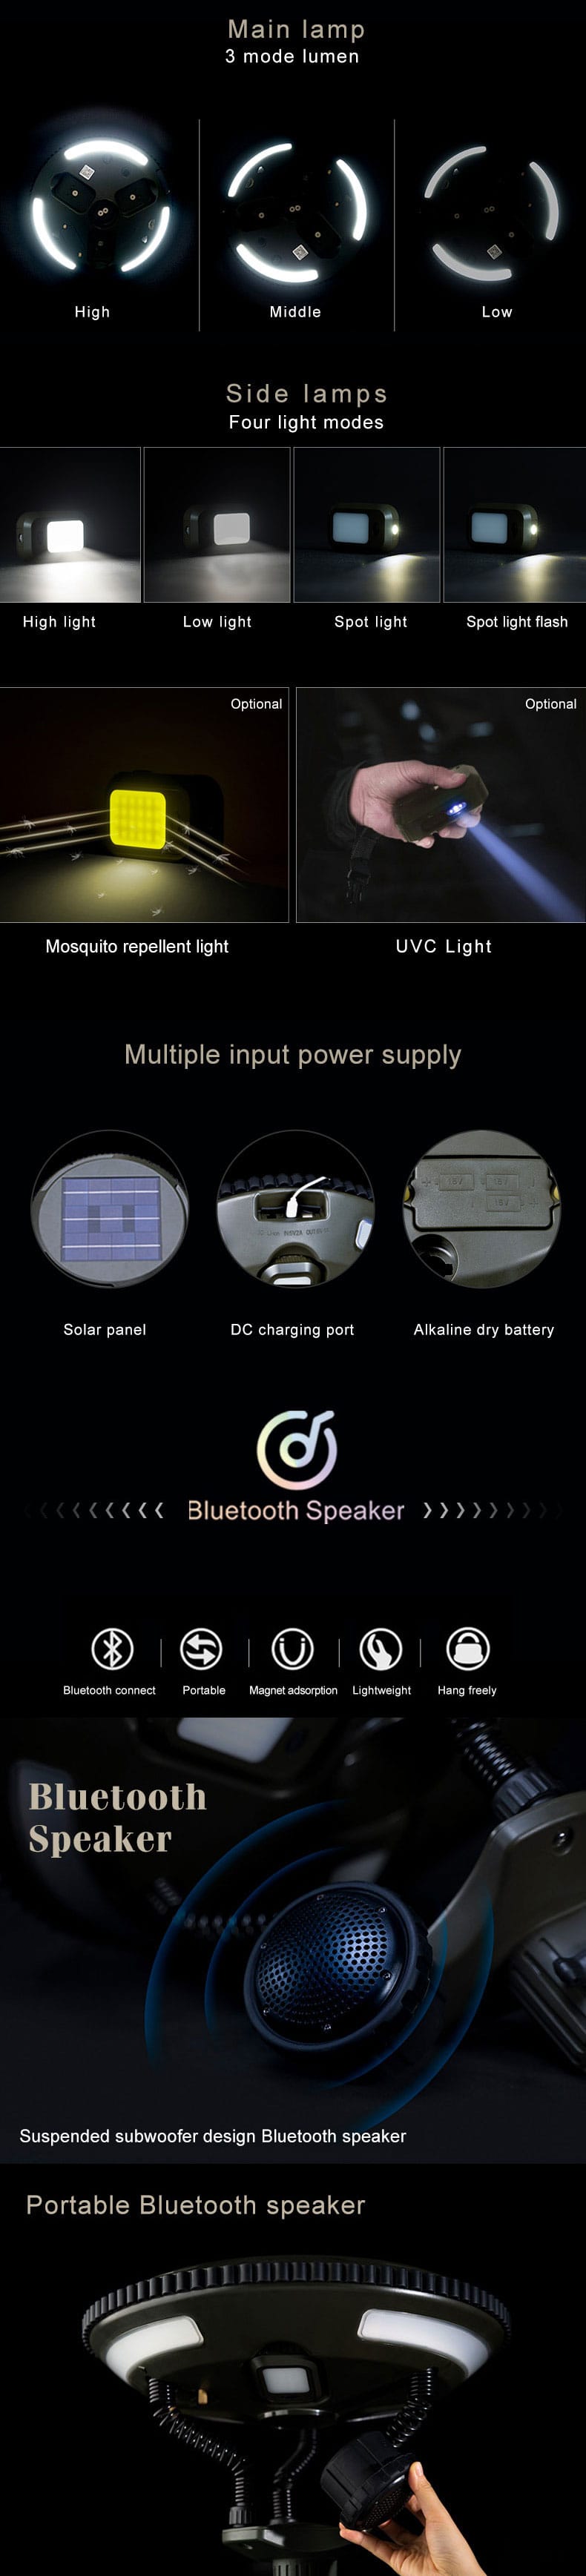 Bluetoothスピーカー付きキャンプライト (2)